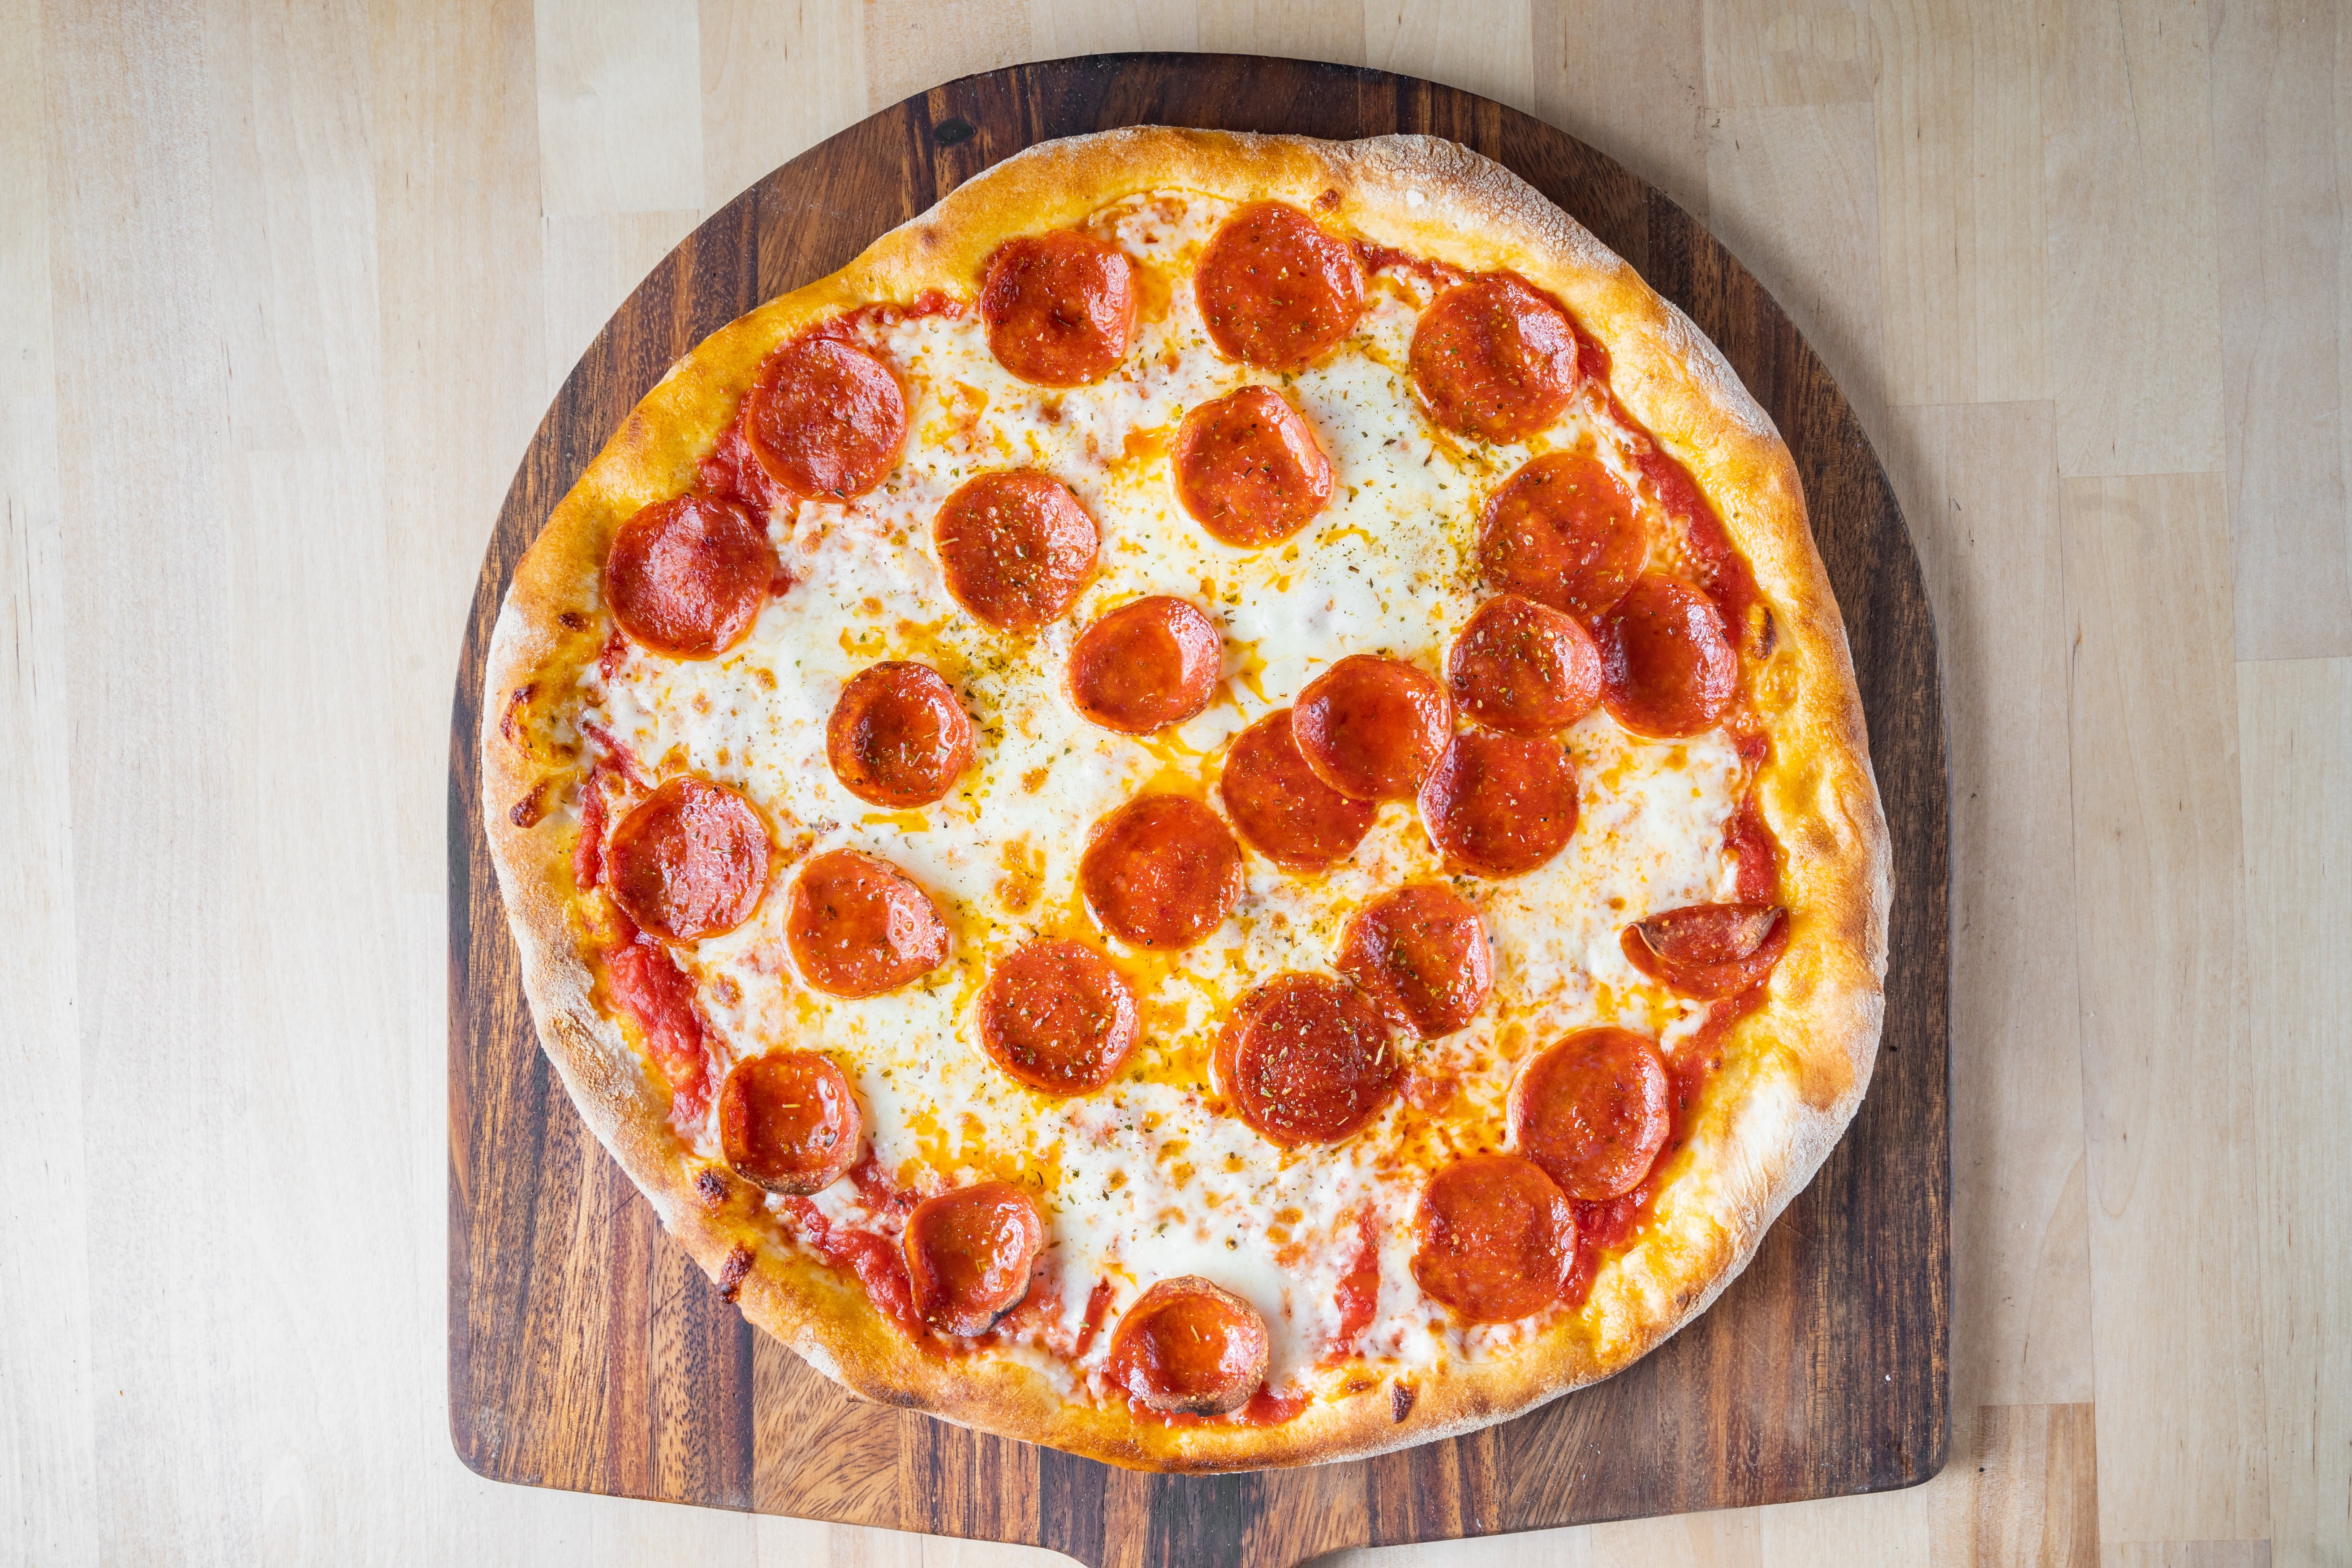 Pazza Pizza - 1543 N Sedgwick St, Chicago, IL 60610 - Menu, Hours